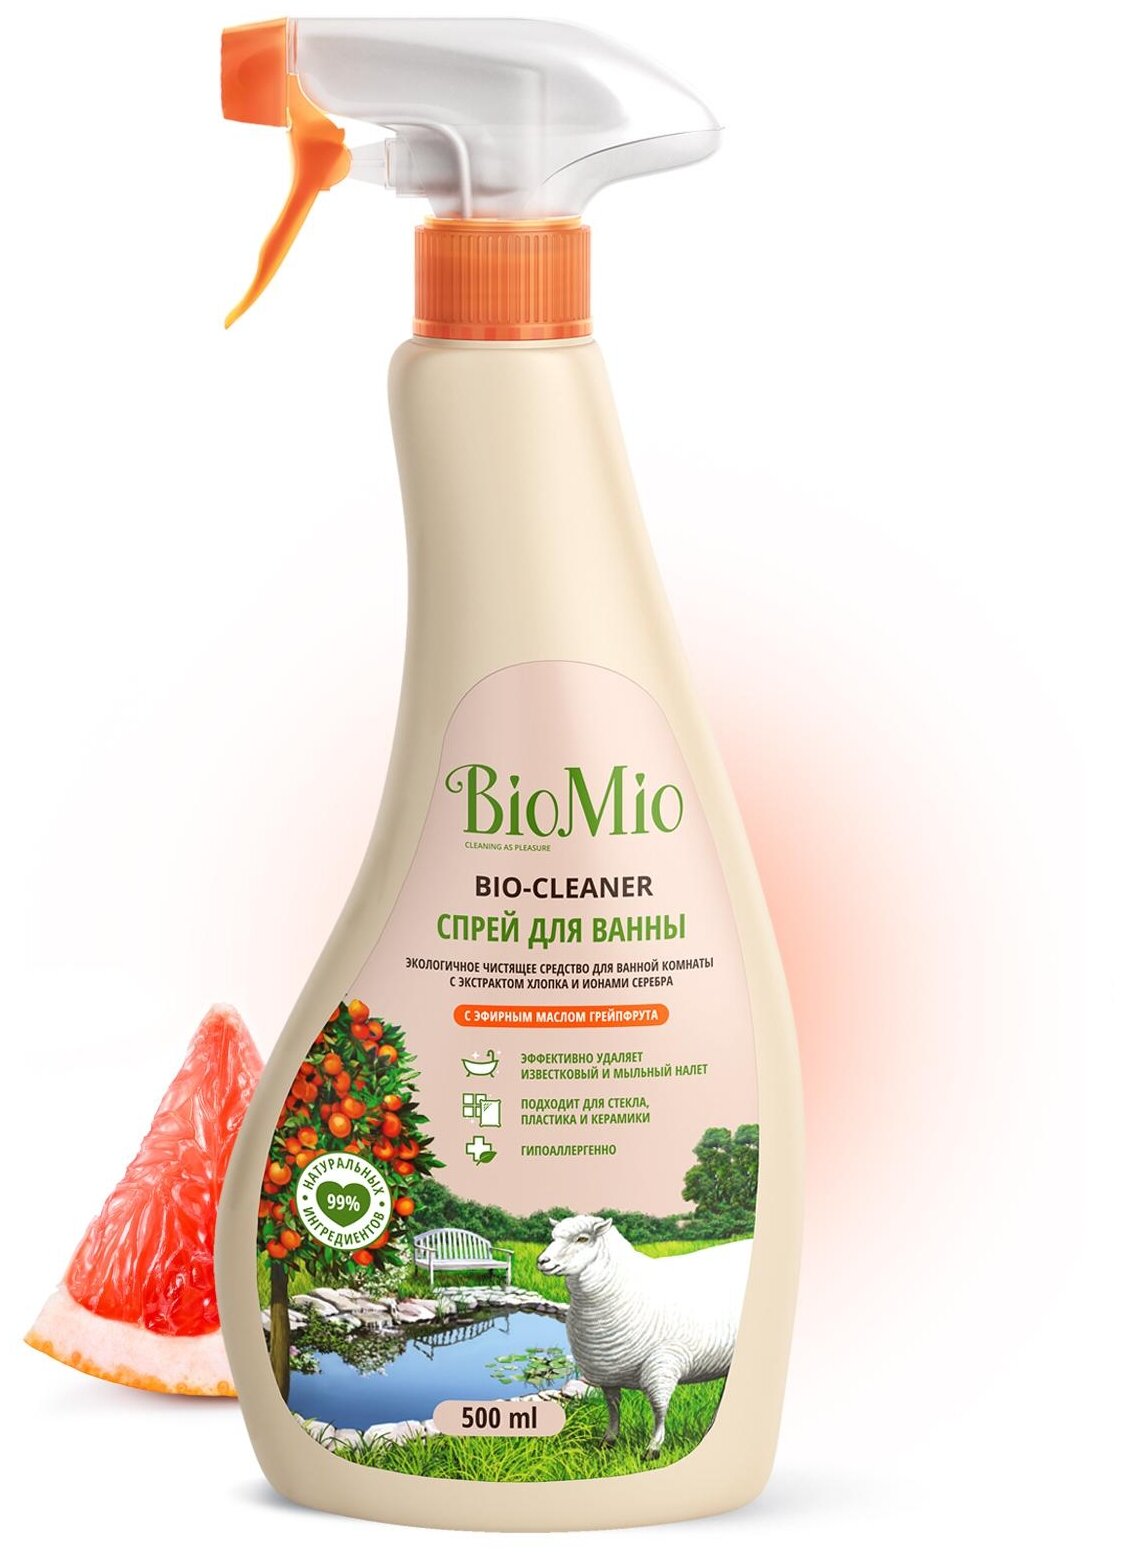 BioMio спрей для ванной комнаты Грейпфрут